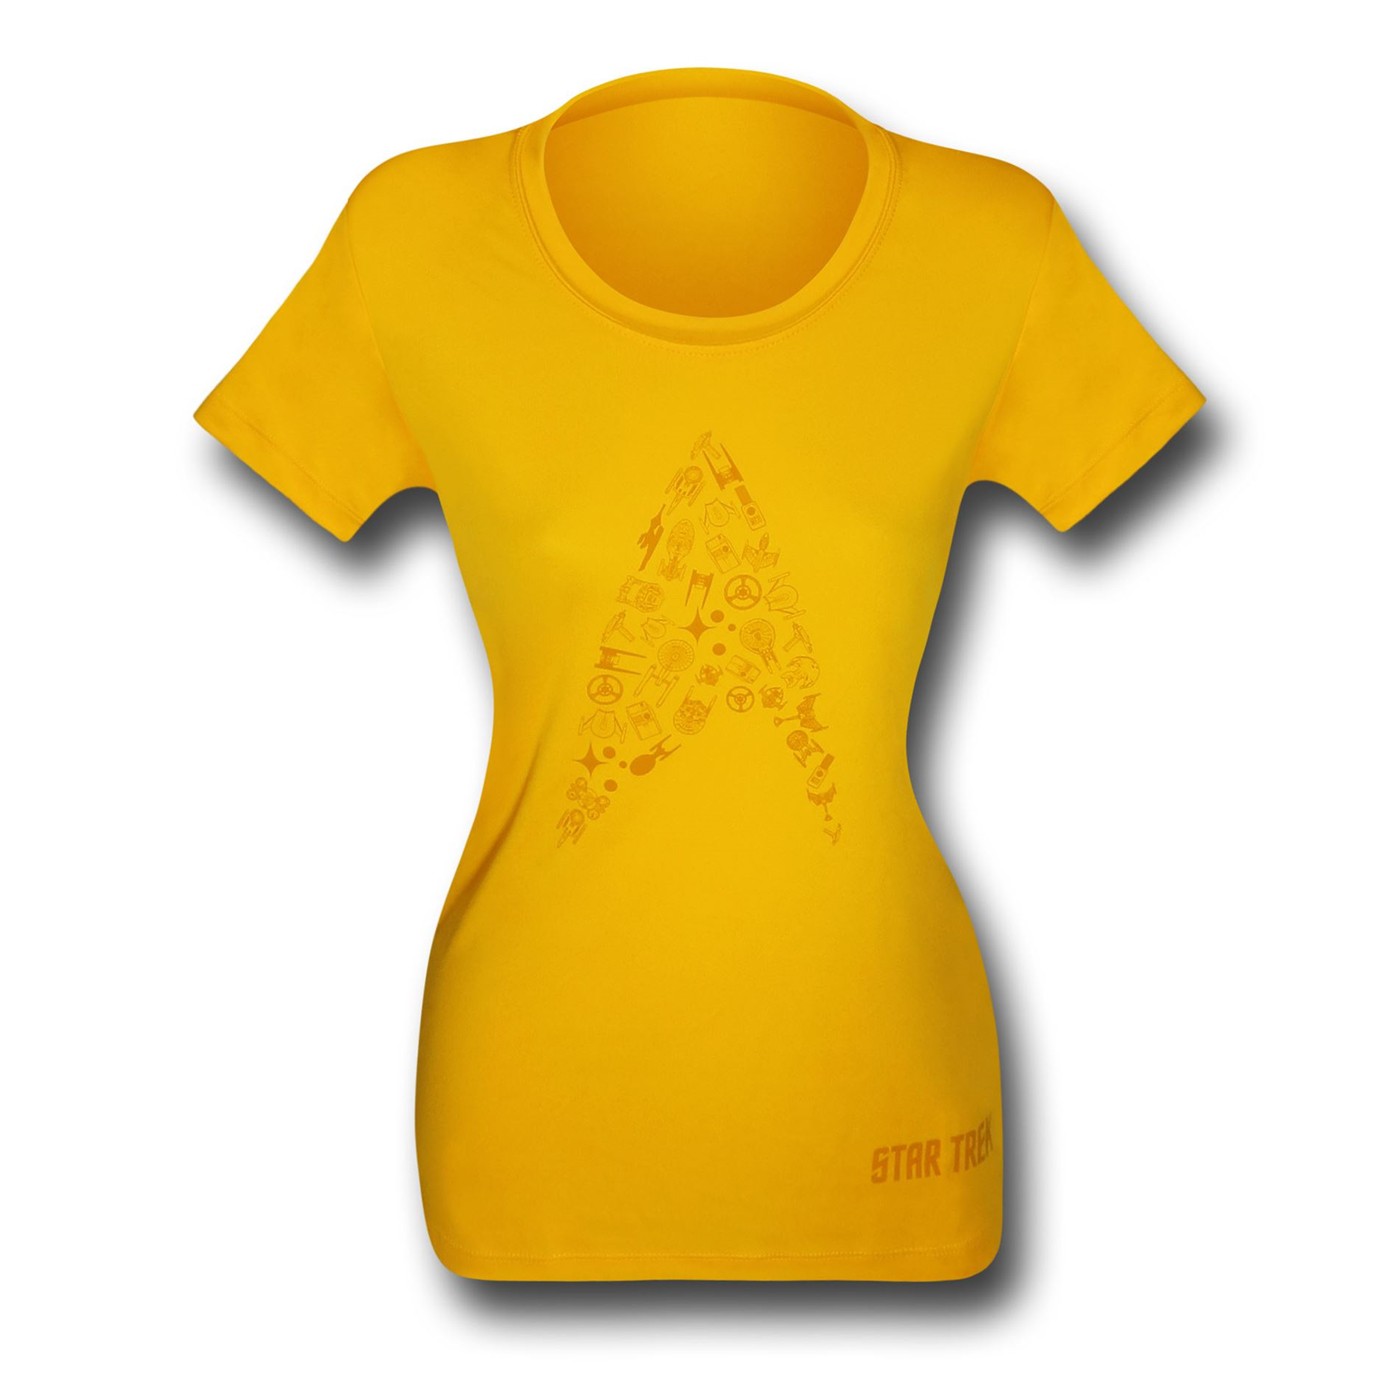 Star Trek Insignia Women's Gold Running Shirt